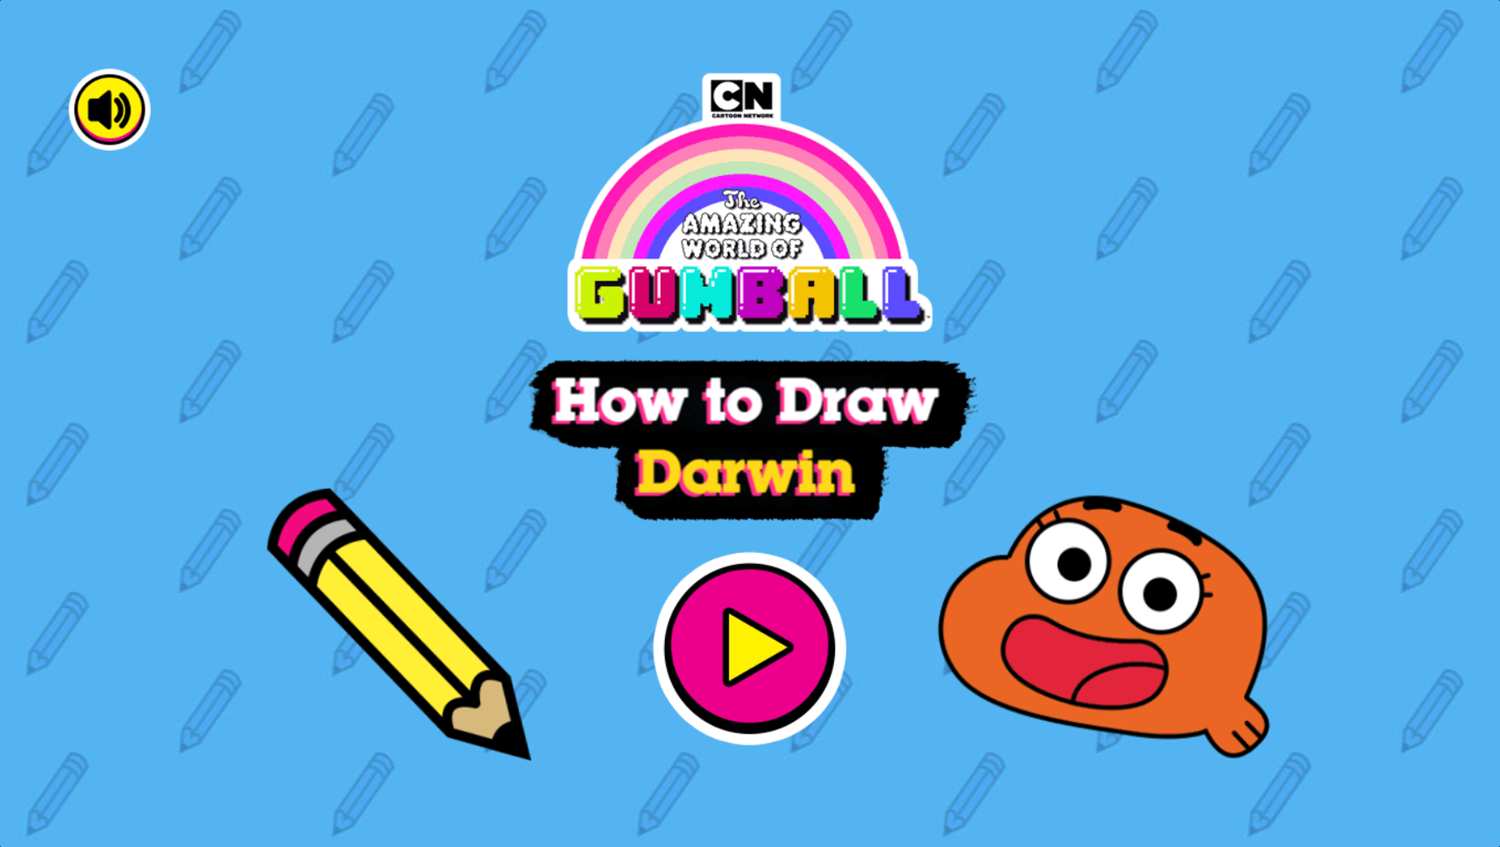 Amazing World of Gumball How to Draw Darwin Game Welcome Screen Screenshot.